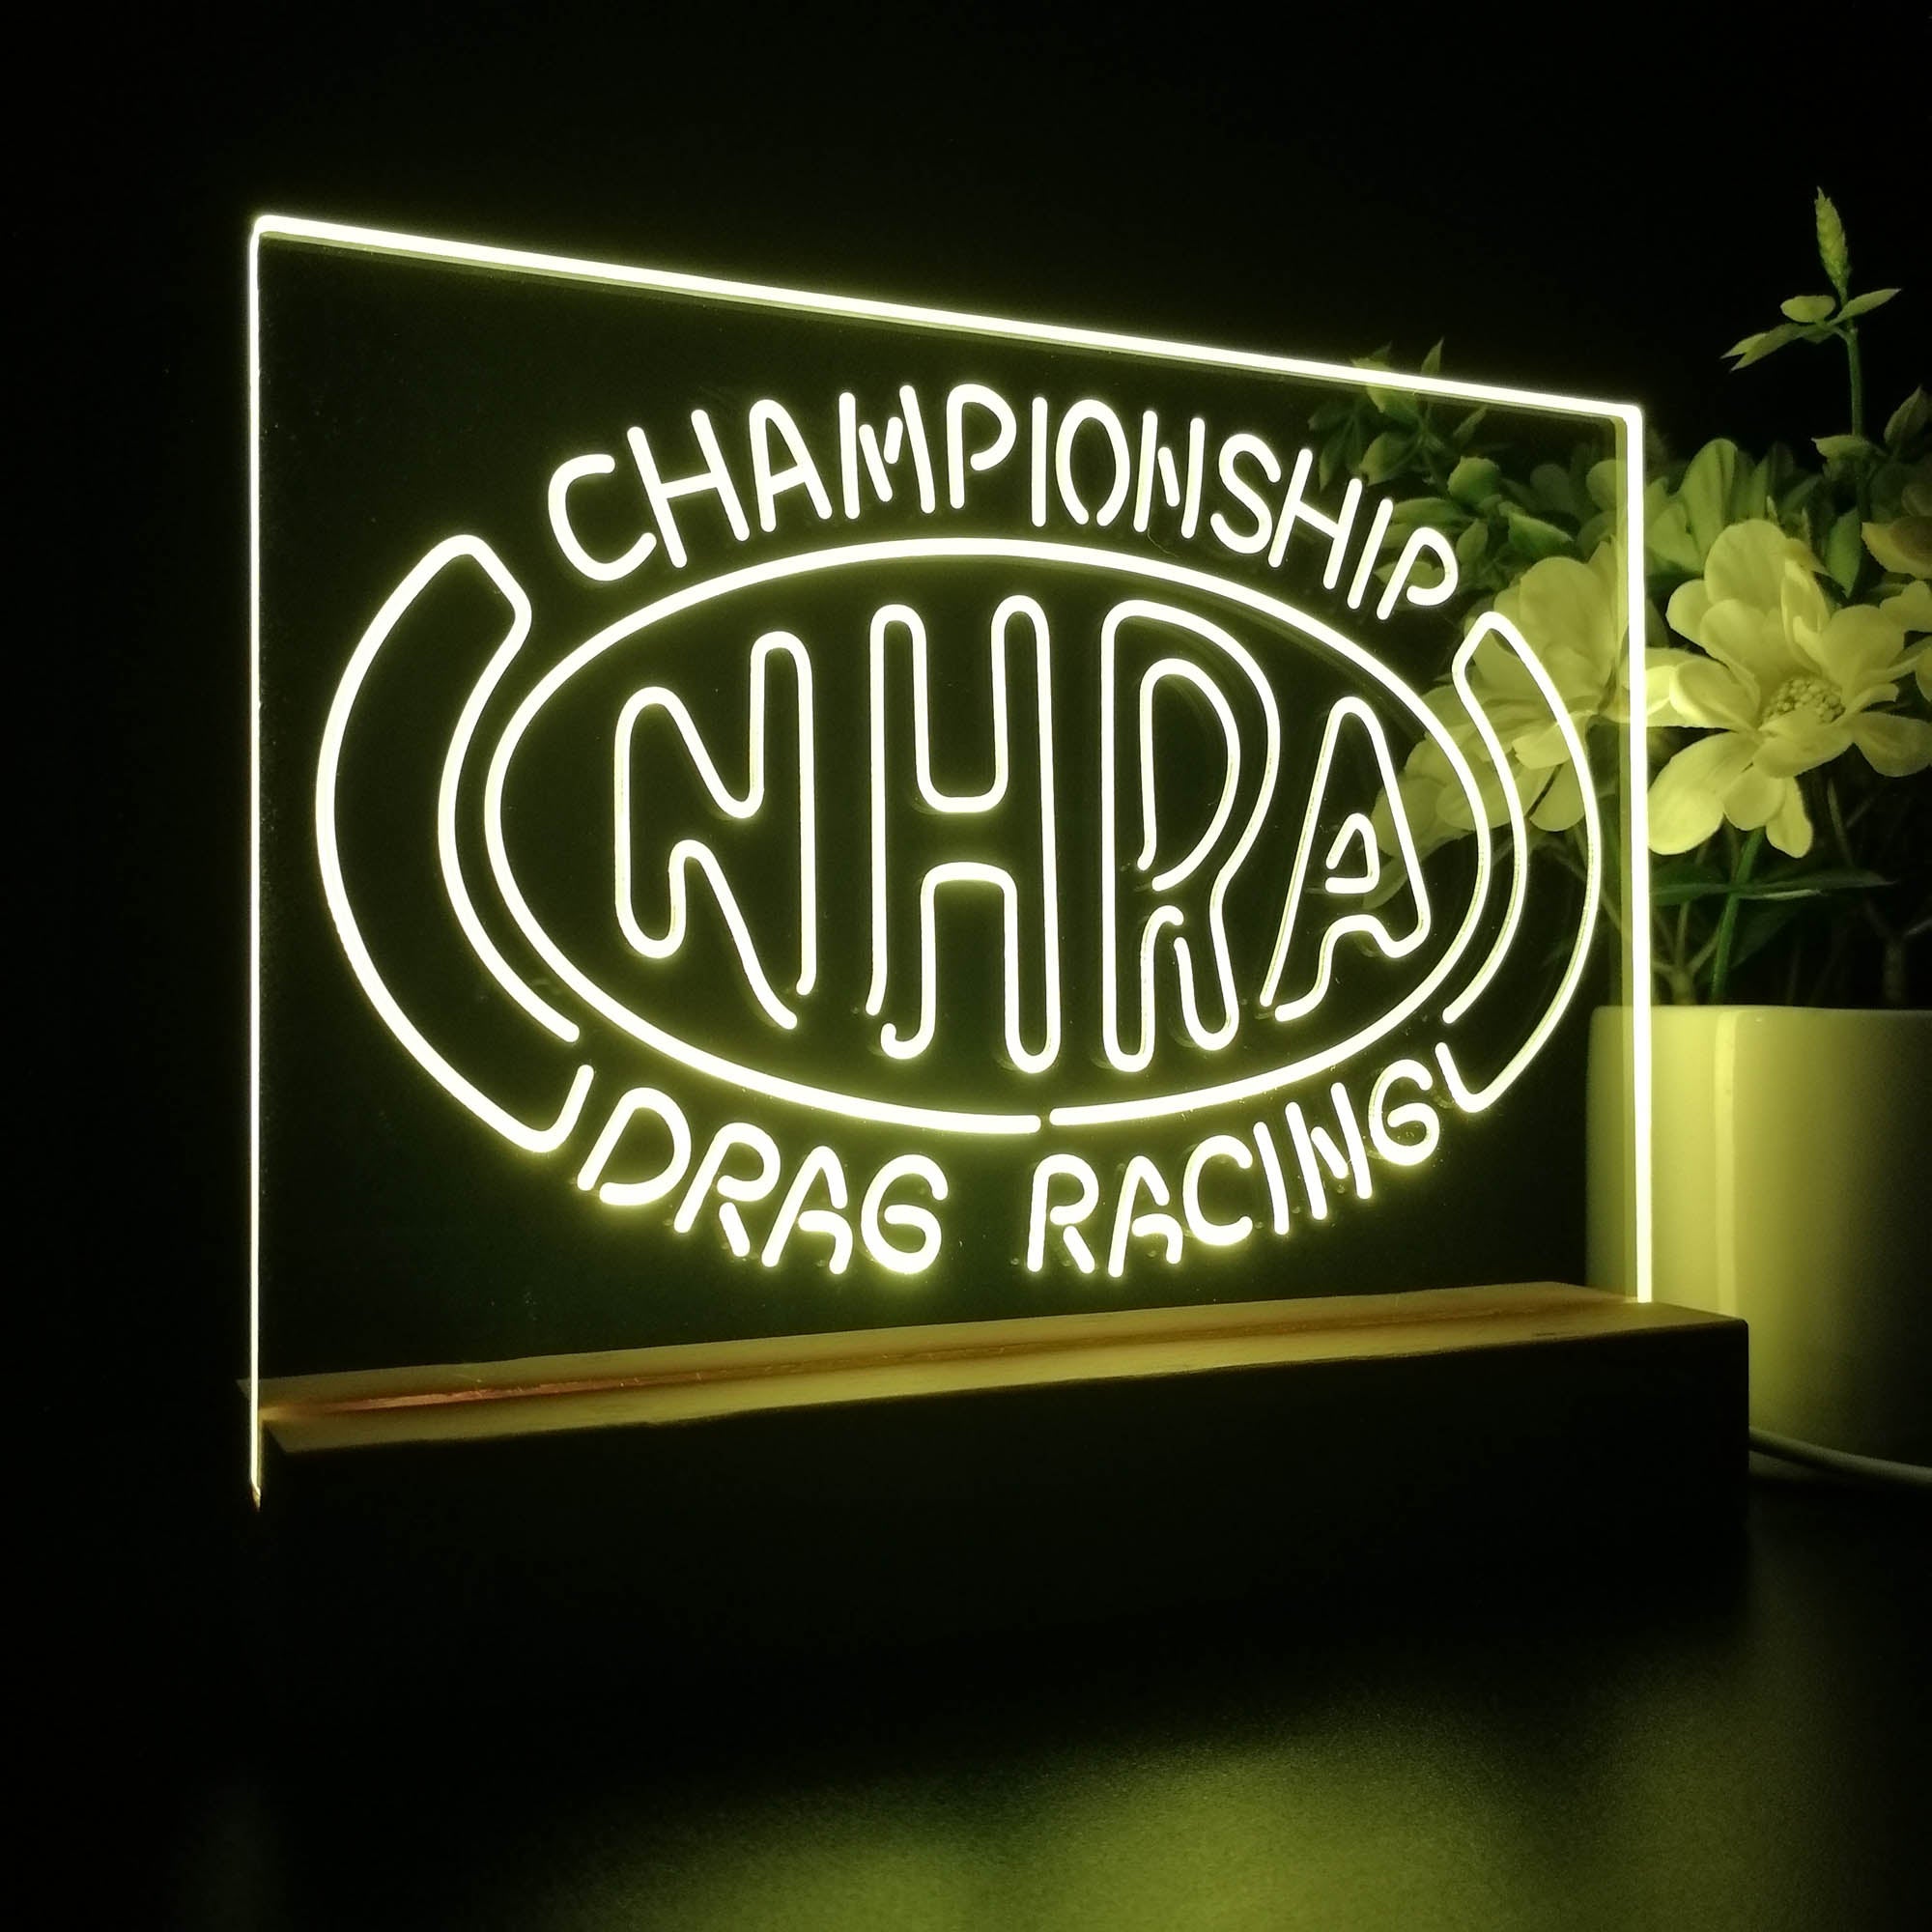 NHRA Drag Racing 3D LED Optical Illusion Sport Team Night Light